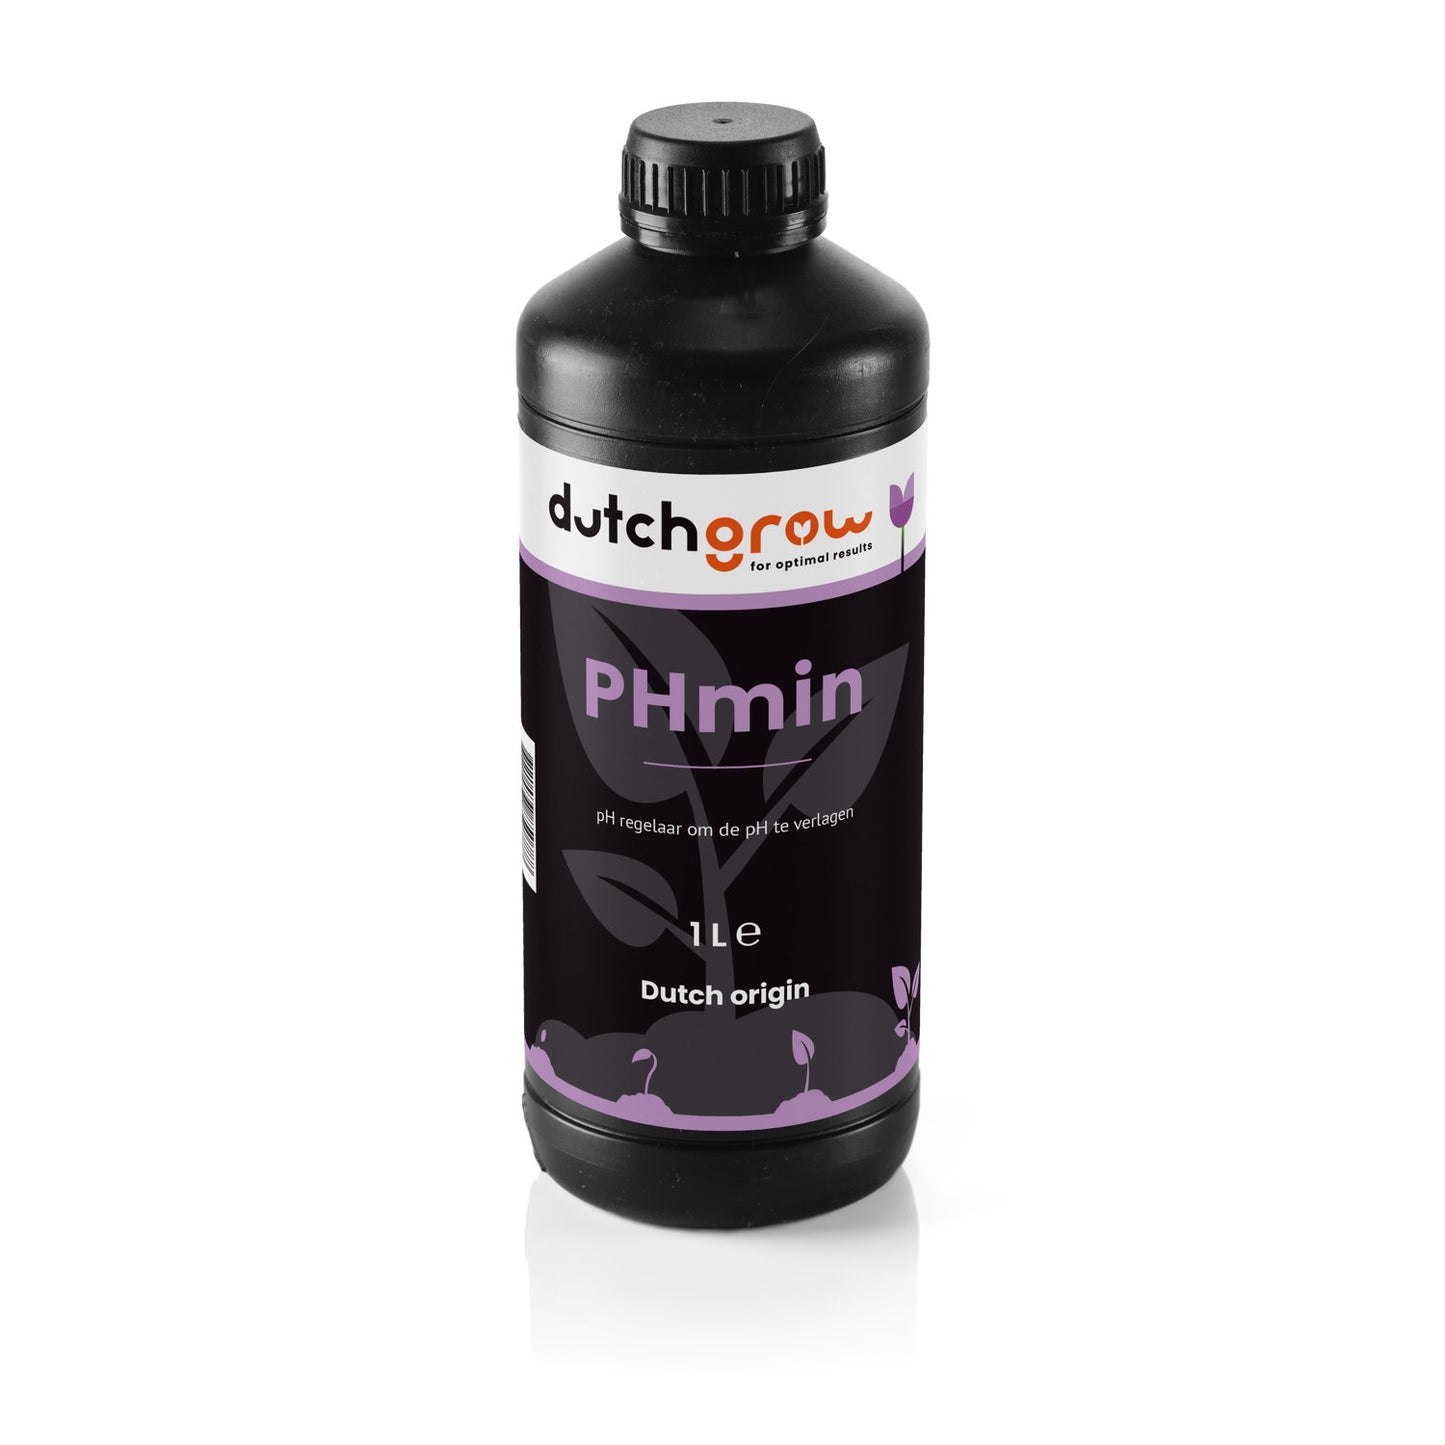 DutchGrow Phmin 1 liter